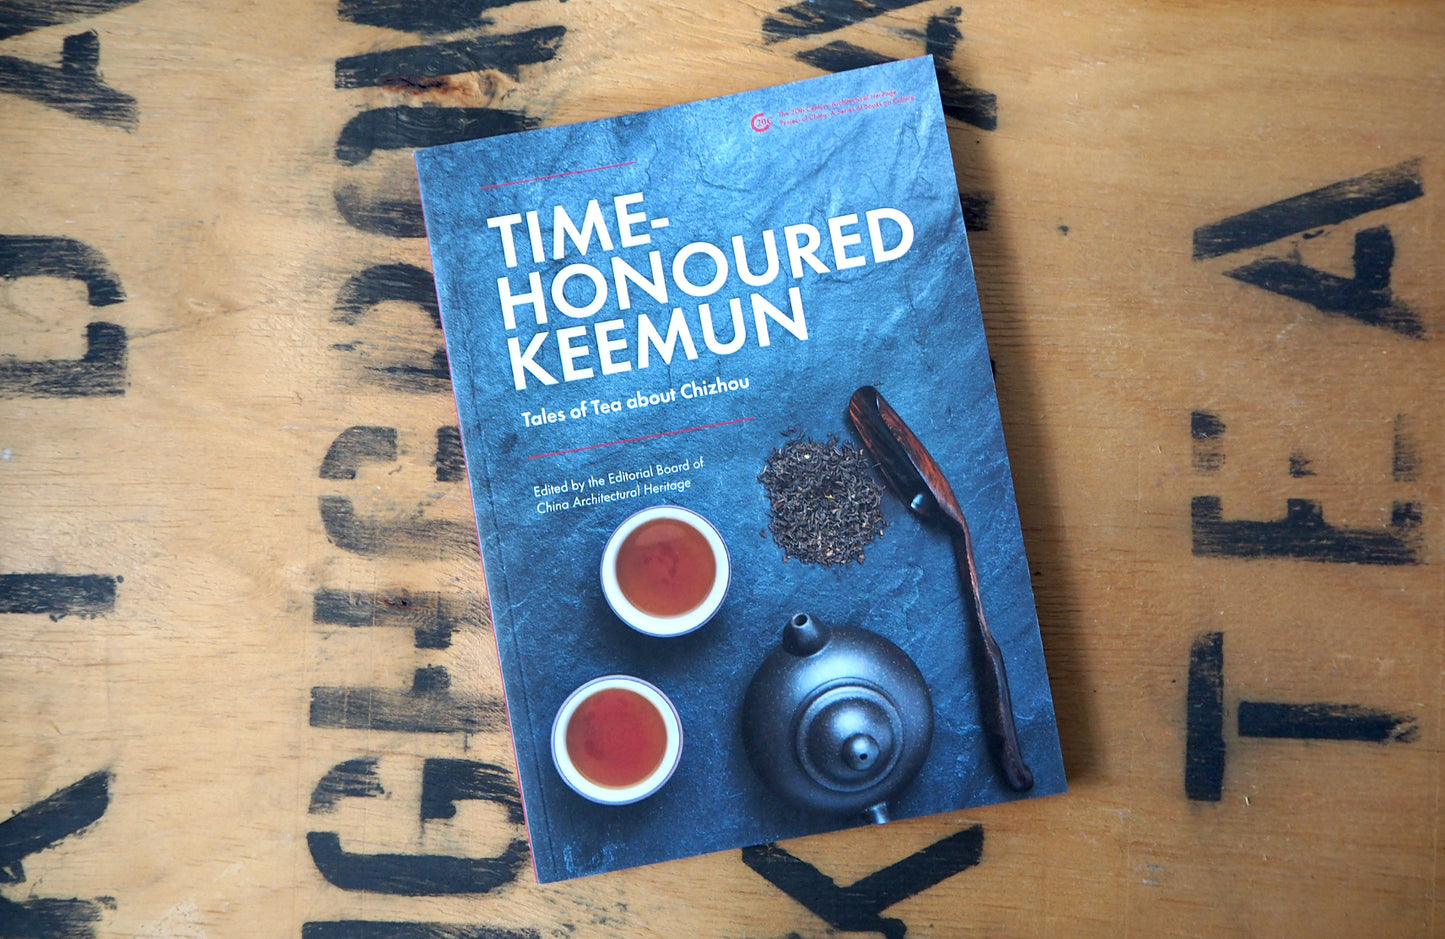 Time Honoured Keemun: Tales of Tea about Chizhou by Jin Lei